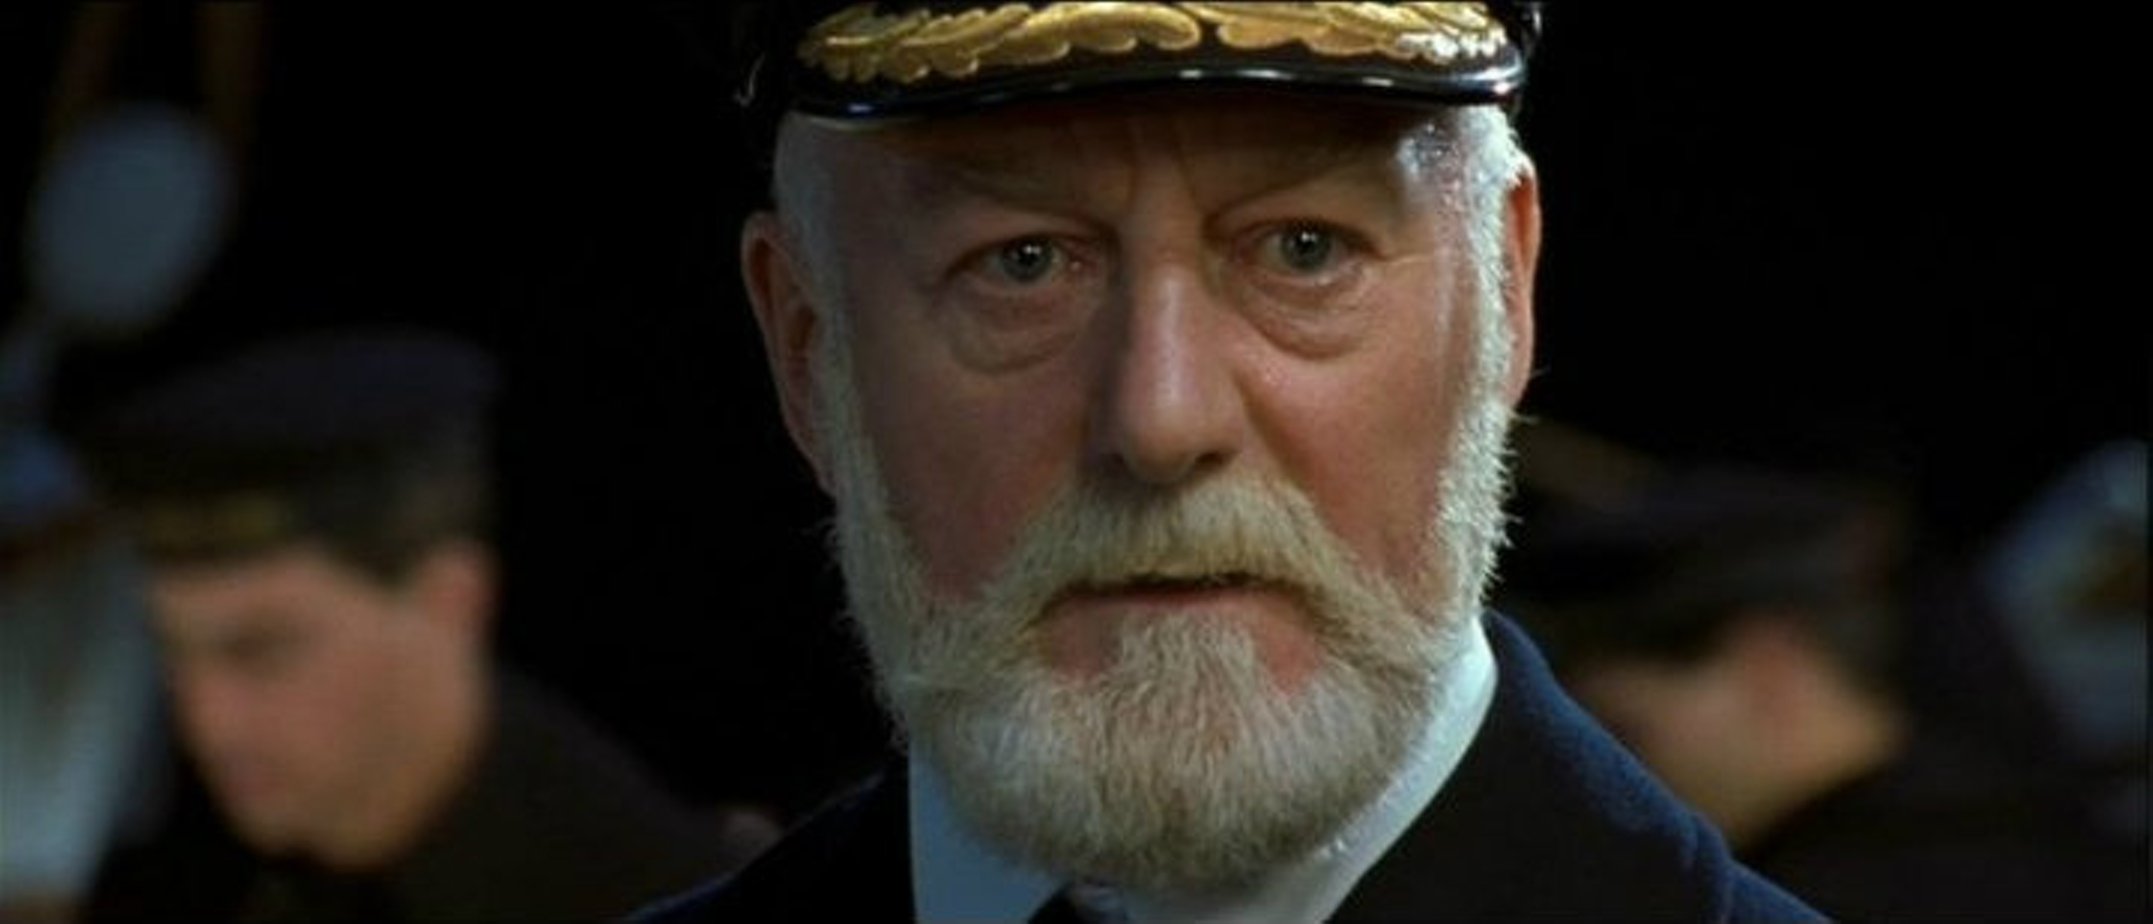 Песня дорогу капитан. Бернард Хилл Титаник. Титаник 1997 Смит. Титаник 1997 Капитан. Bernard Hill 1997 Титаник.